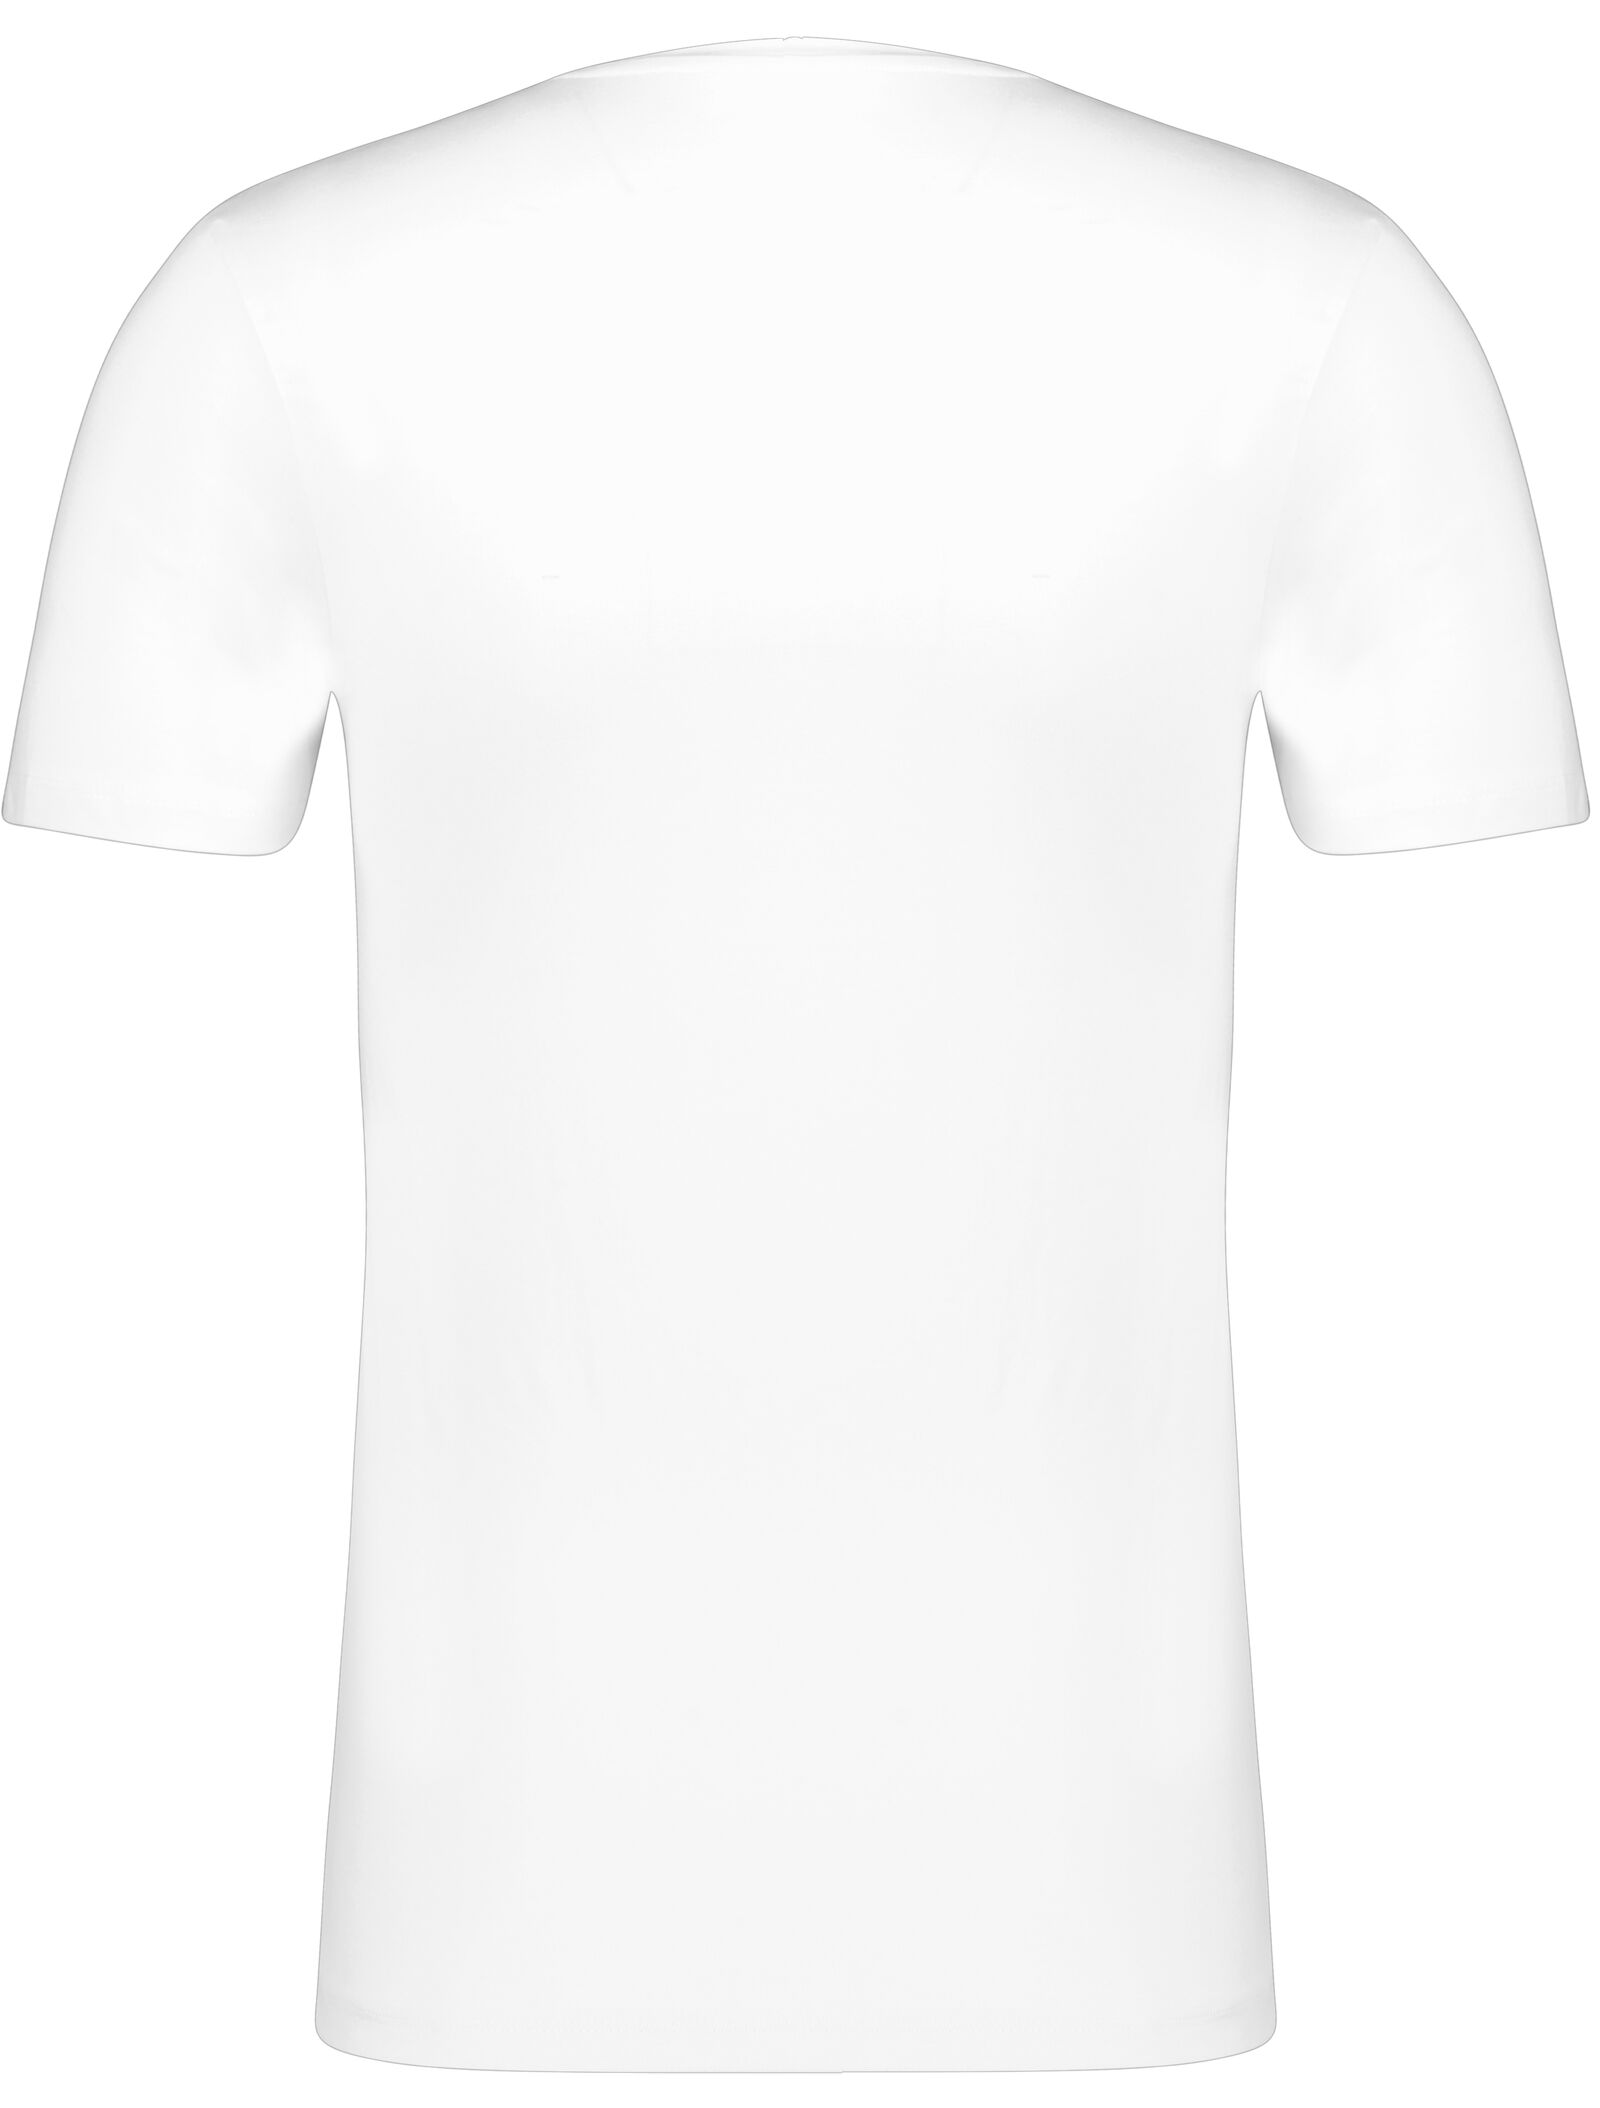 t-shirt homme slim fit col en v - avec bambou blanc blanc - 1000010016 - HEMA